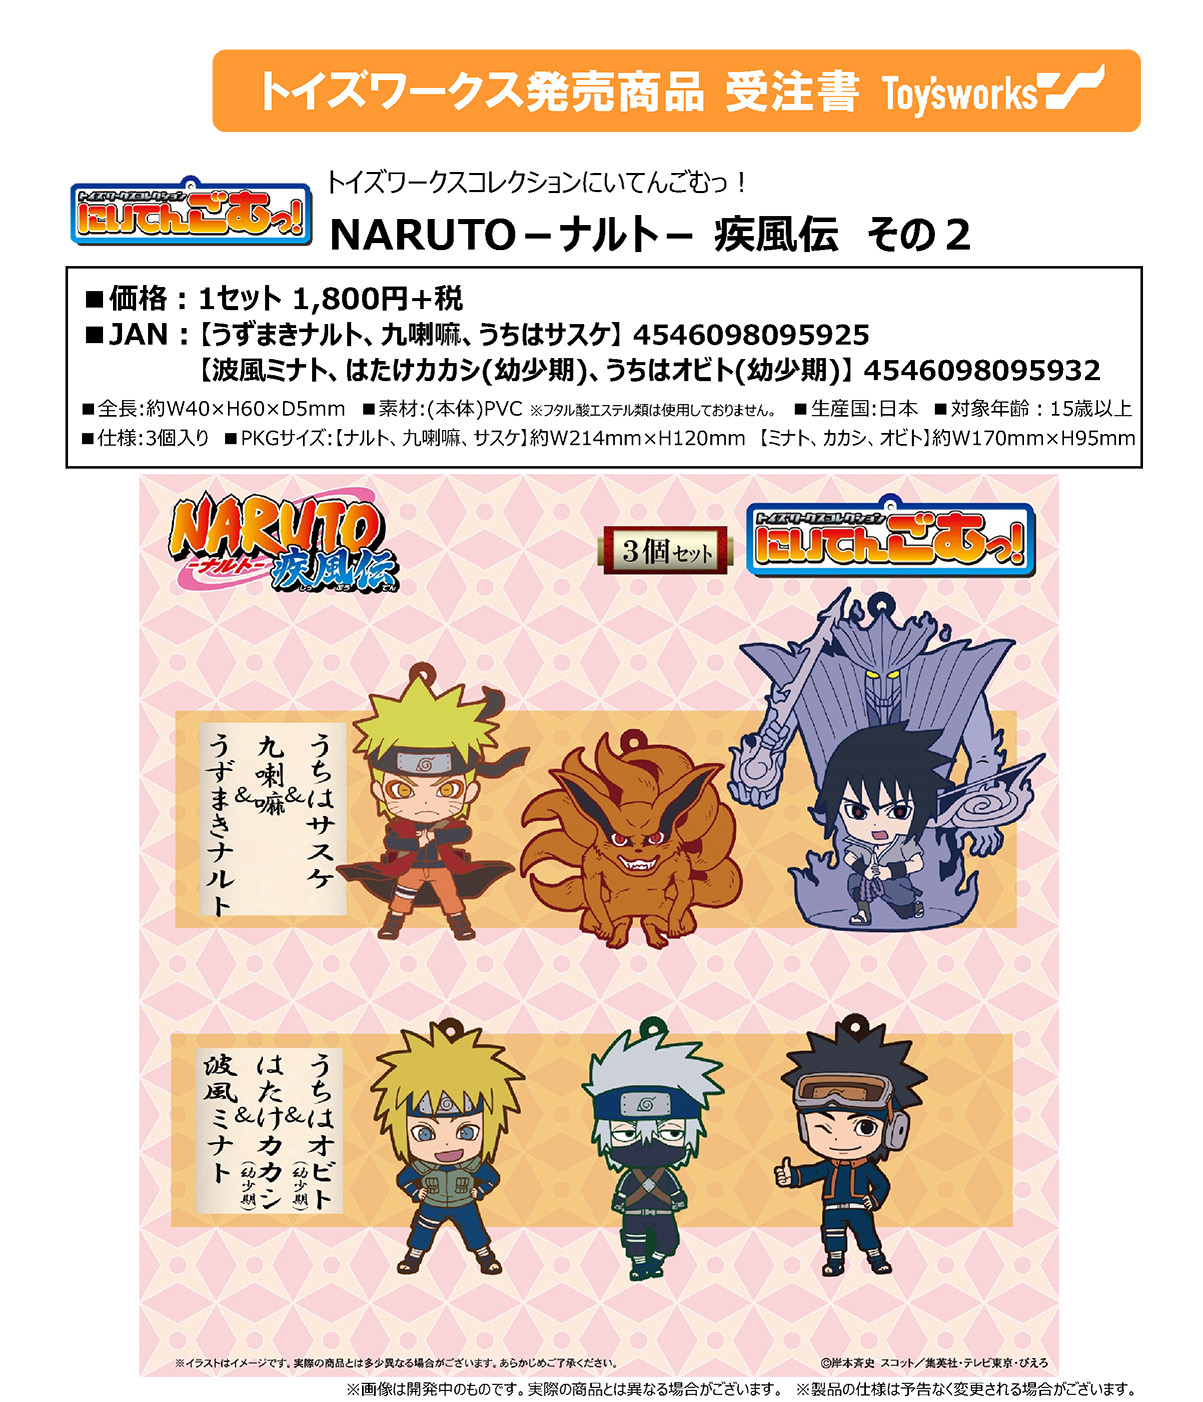 Rev 代購 預購 トイズワークスコレクション にいてんごむっ Naruto ナルト 疾風伝 その2 Toy S Works Collection Niitengomu Naruto Shippuden Vol 2